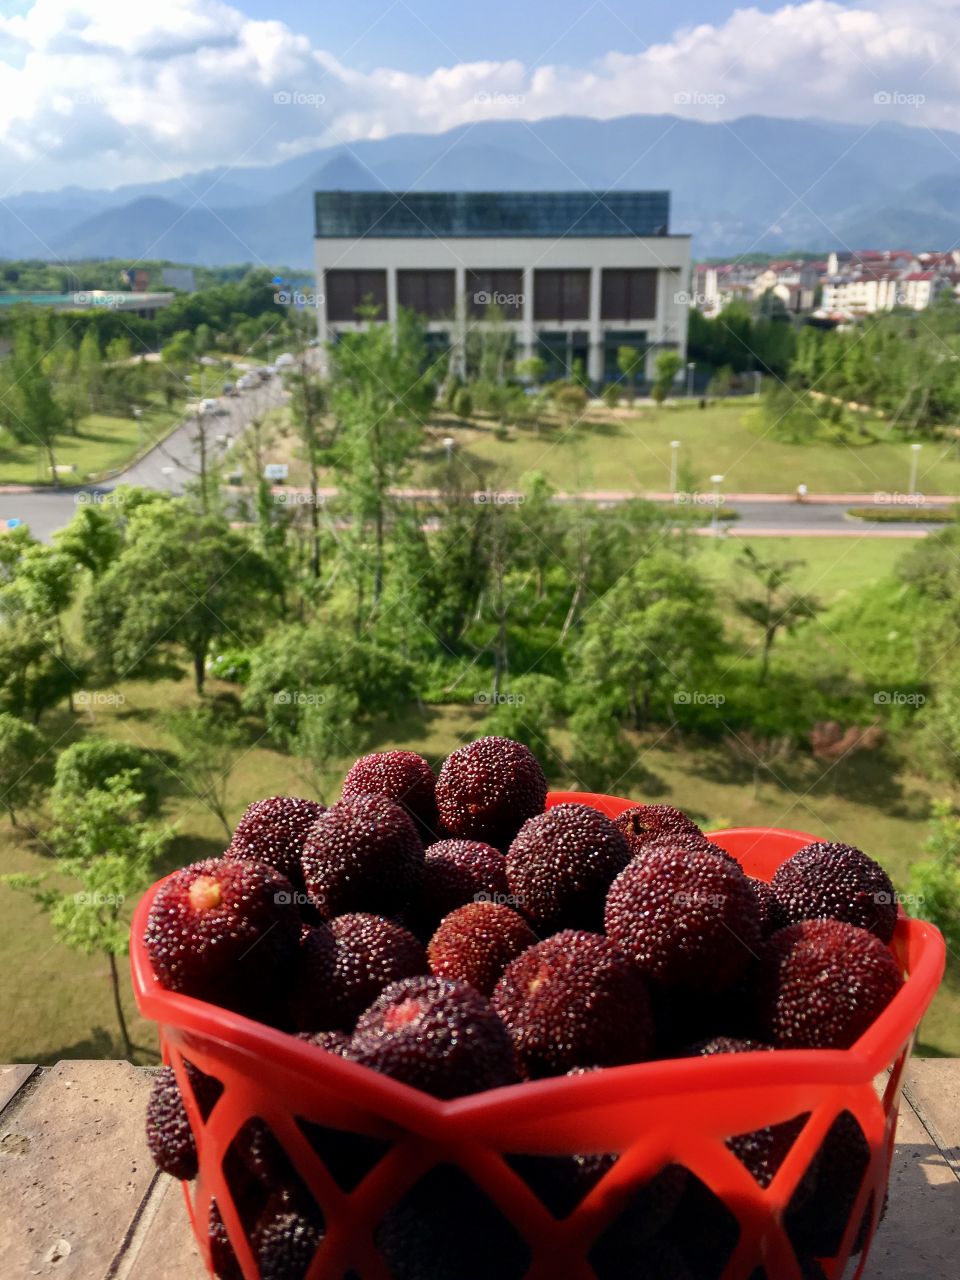 Summertime berries 